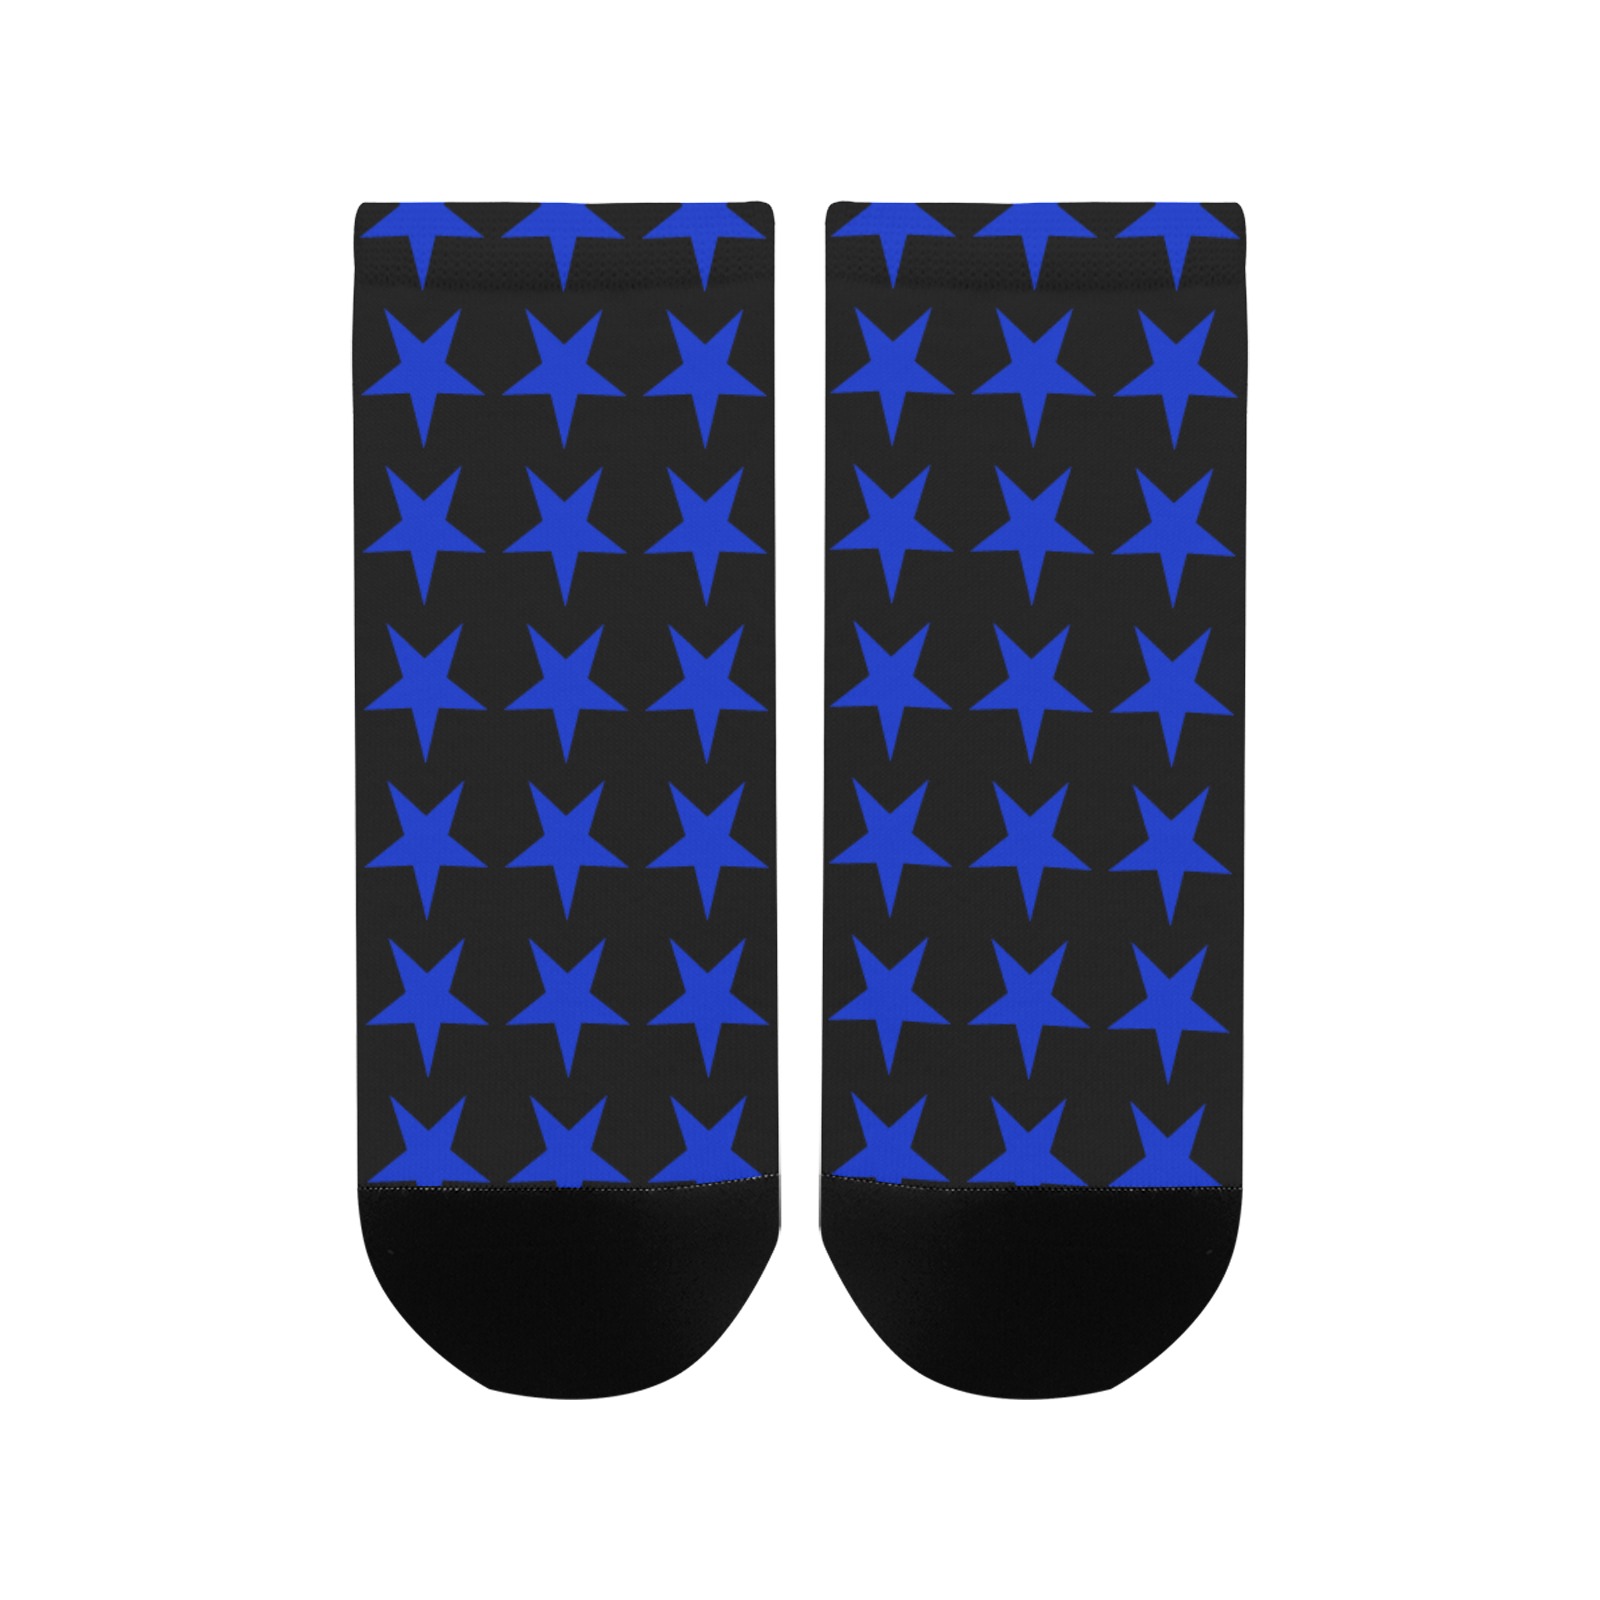 Star Blue Women's Ankle Socks